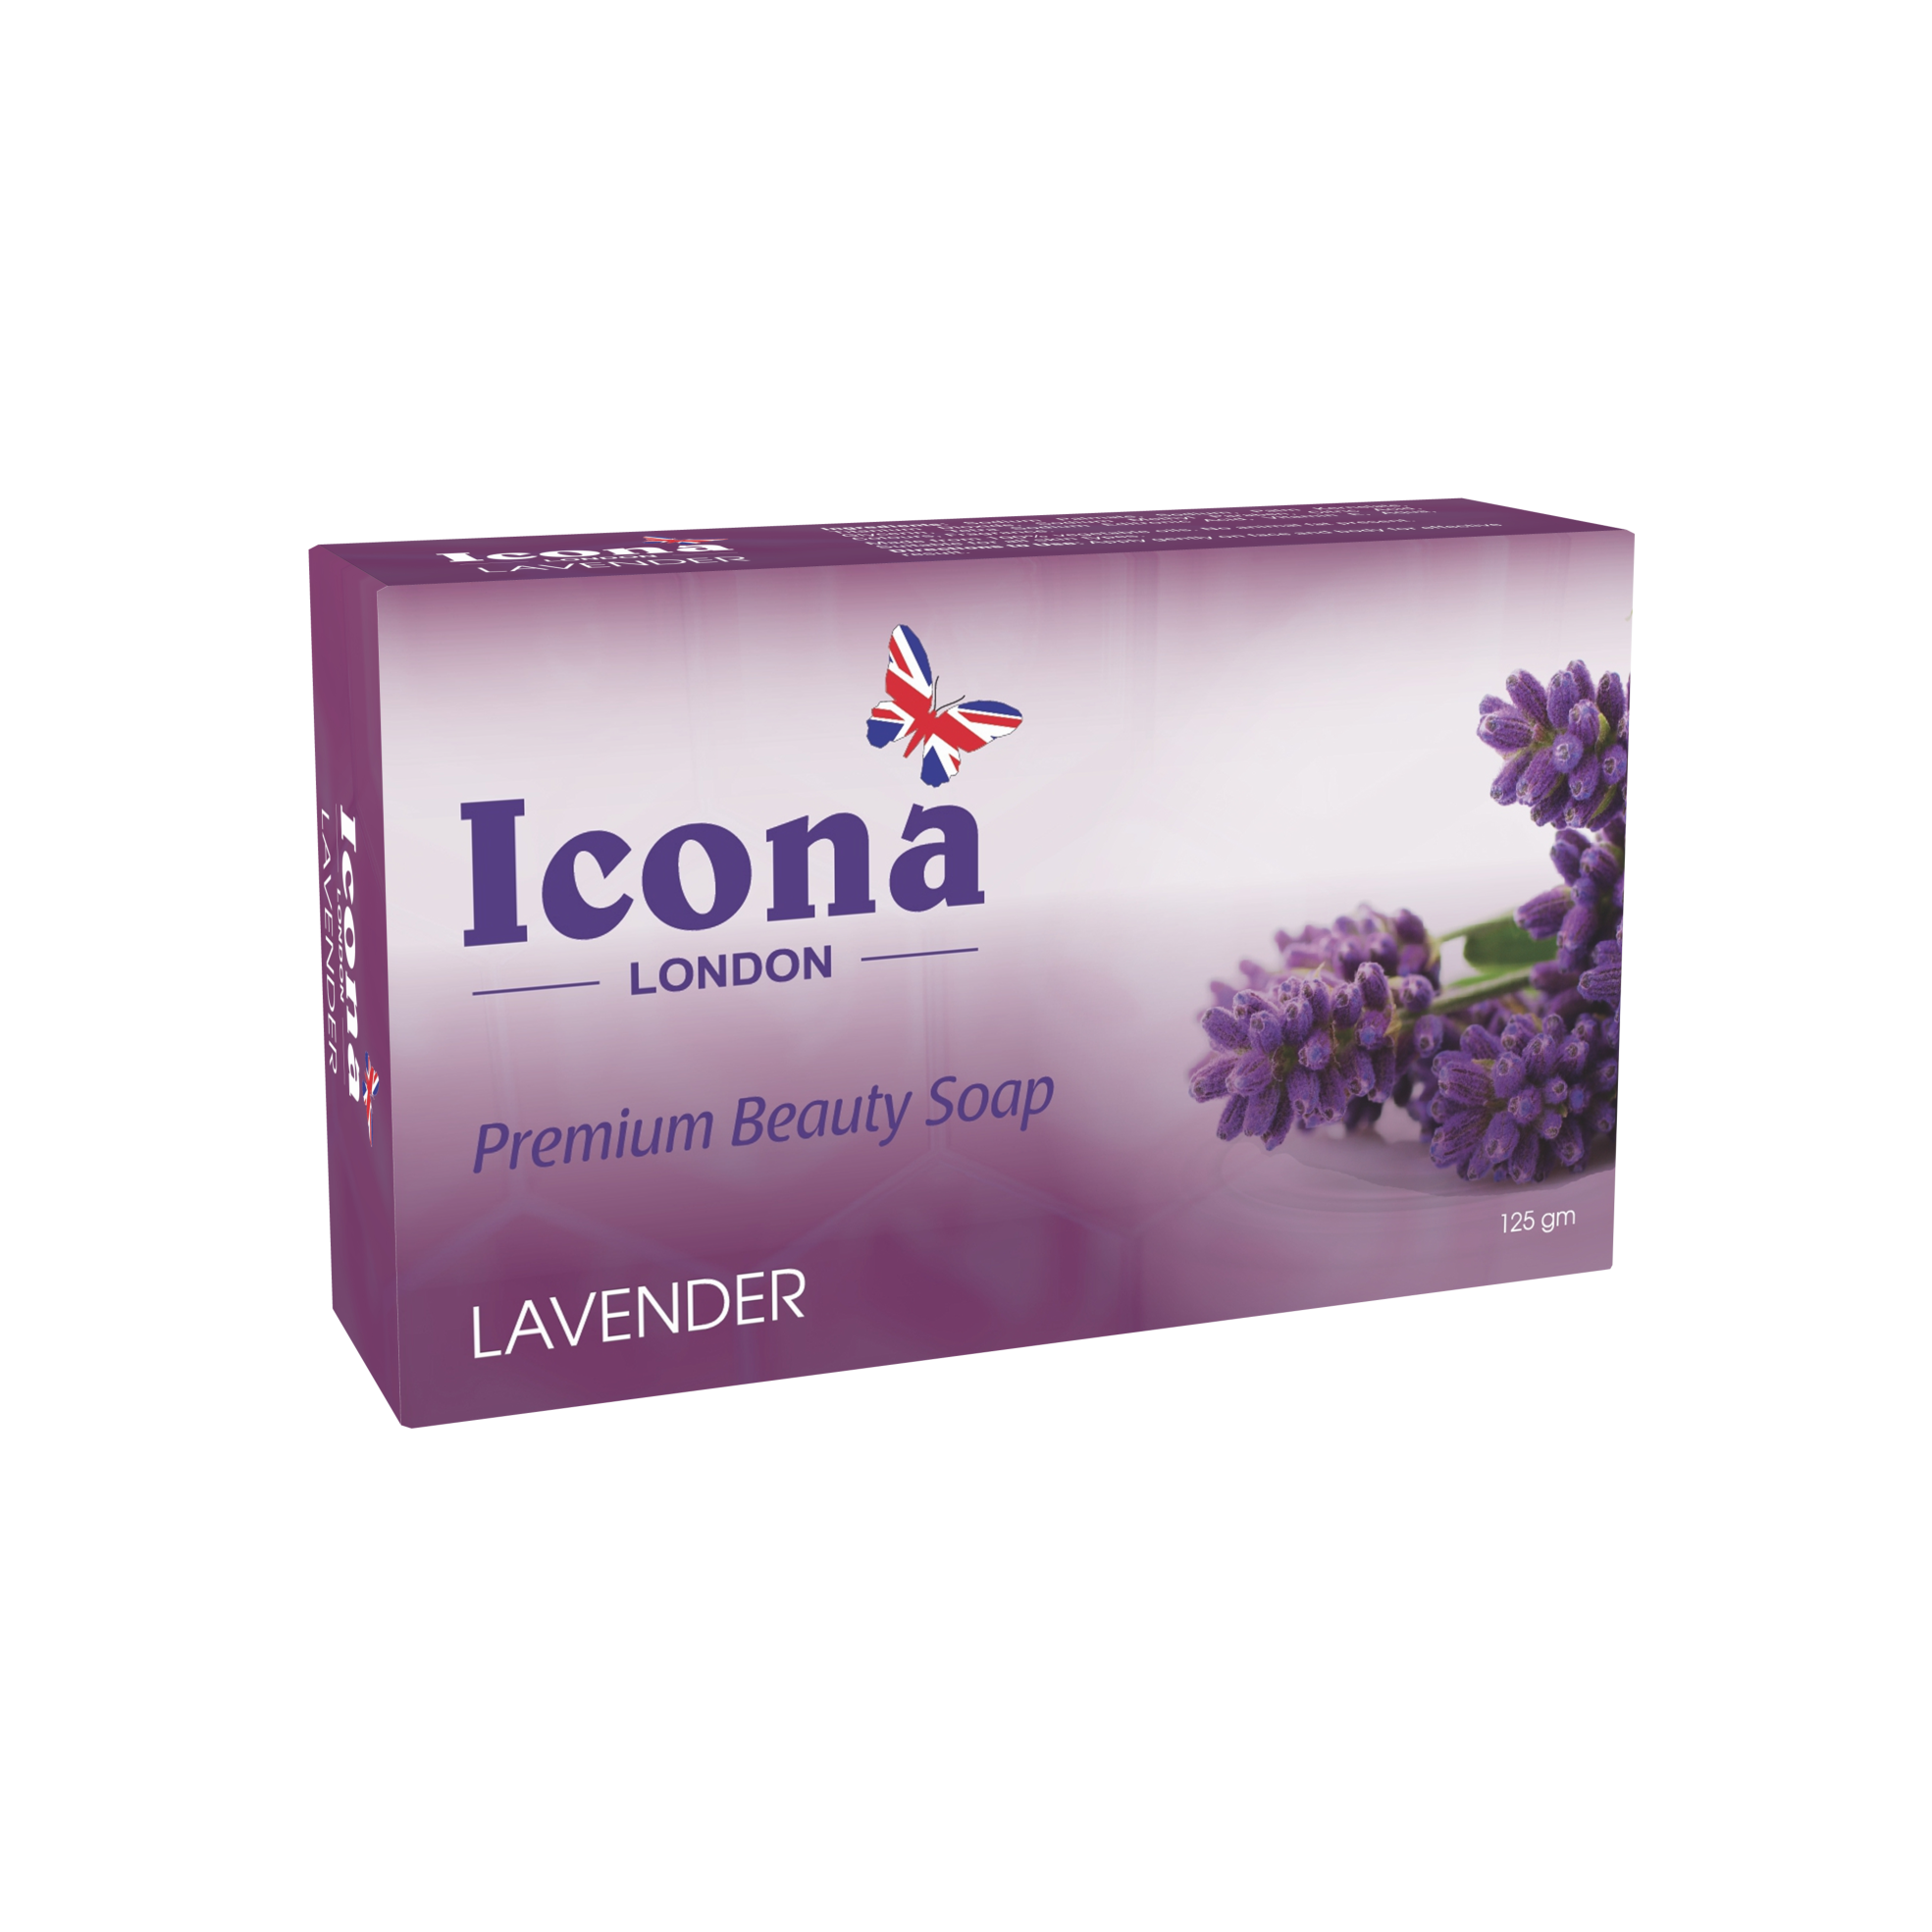 Icona London Beauty Soap (Lavender)